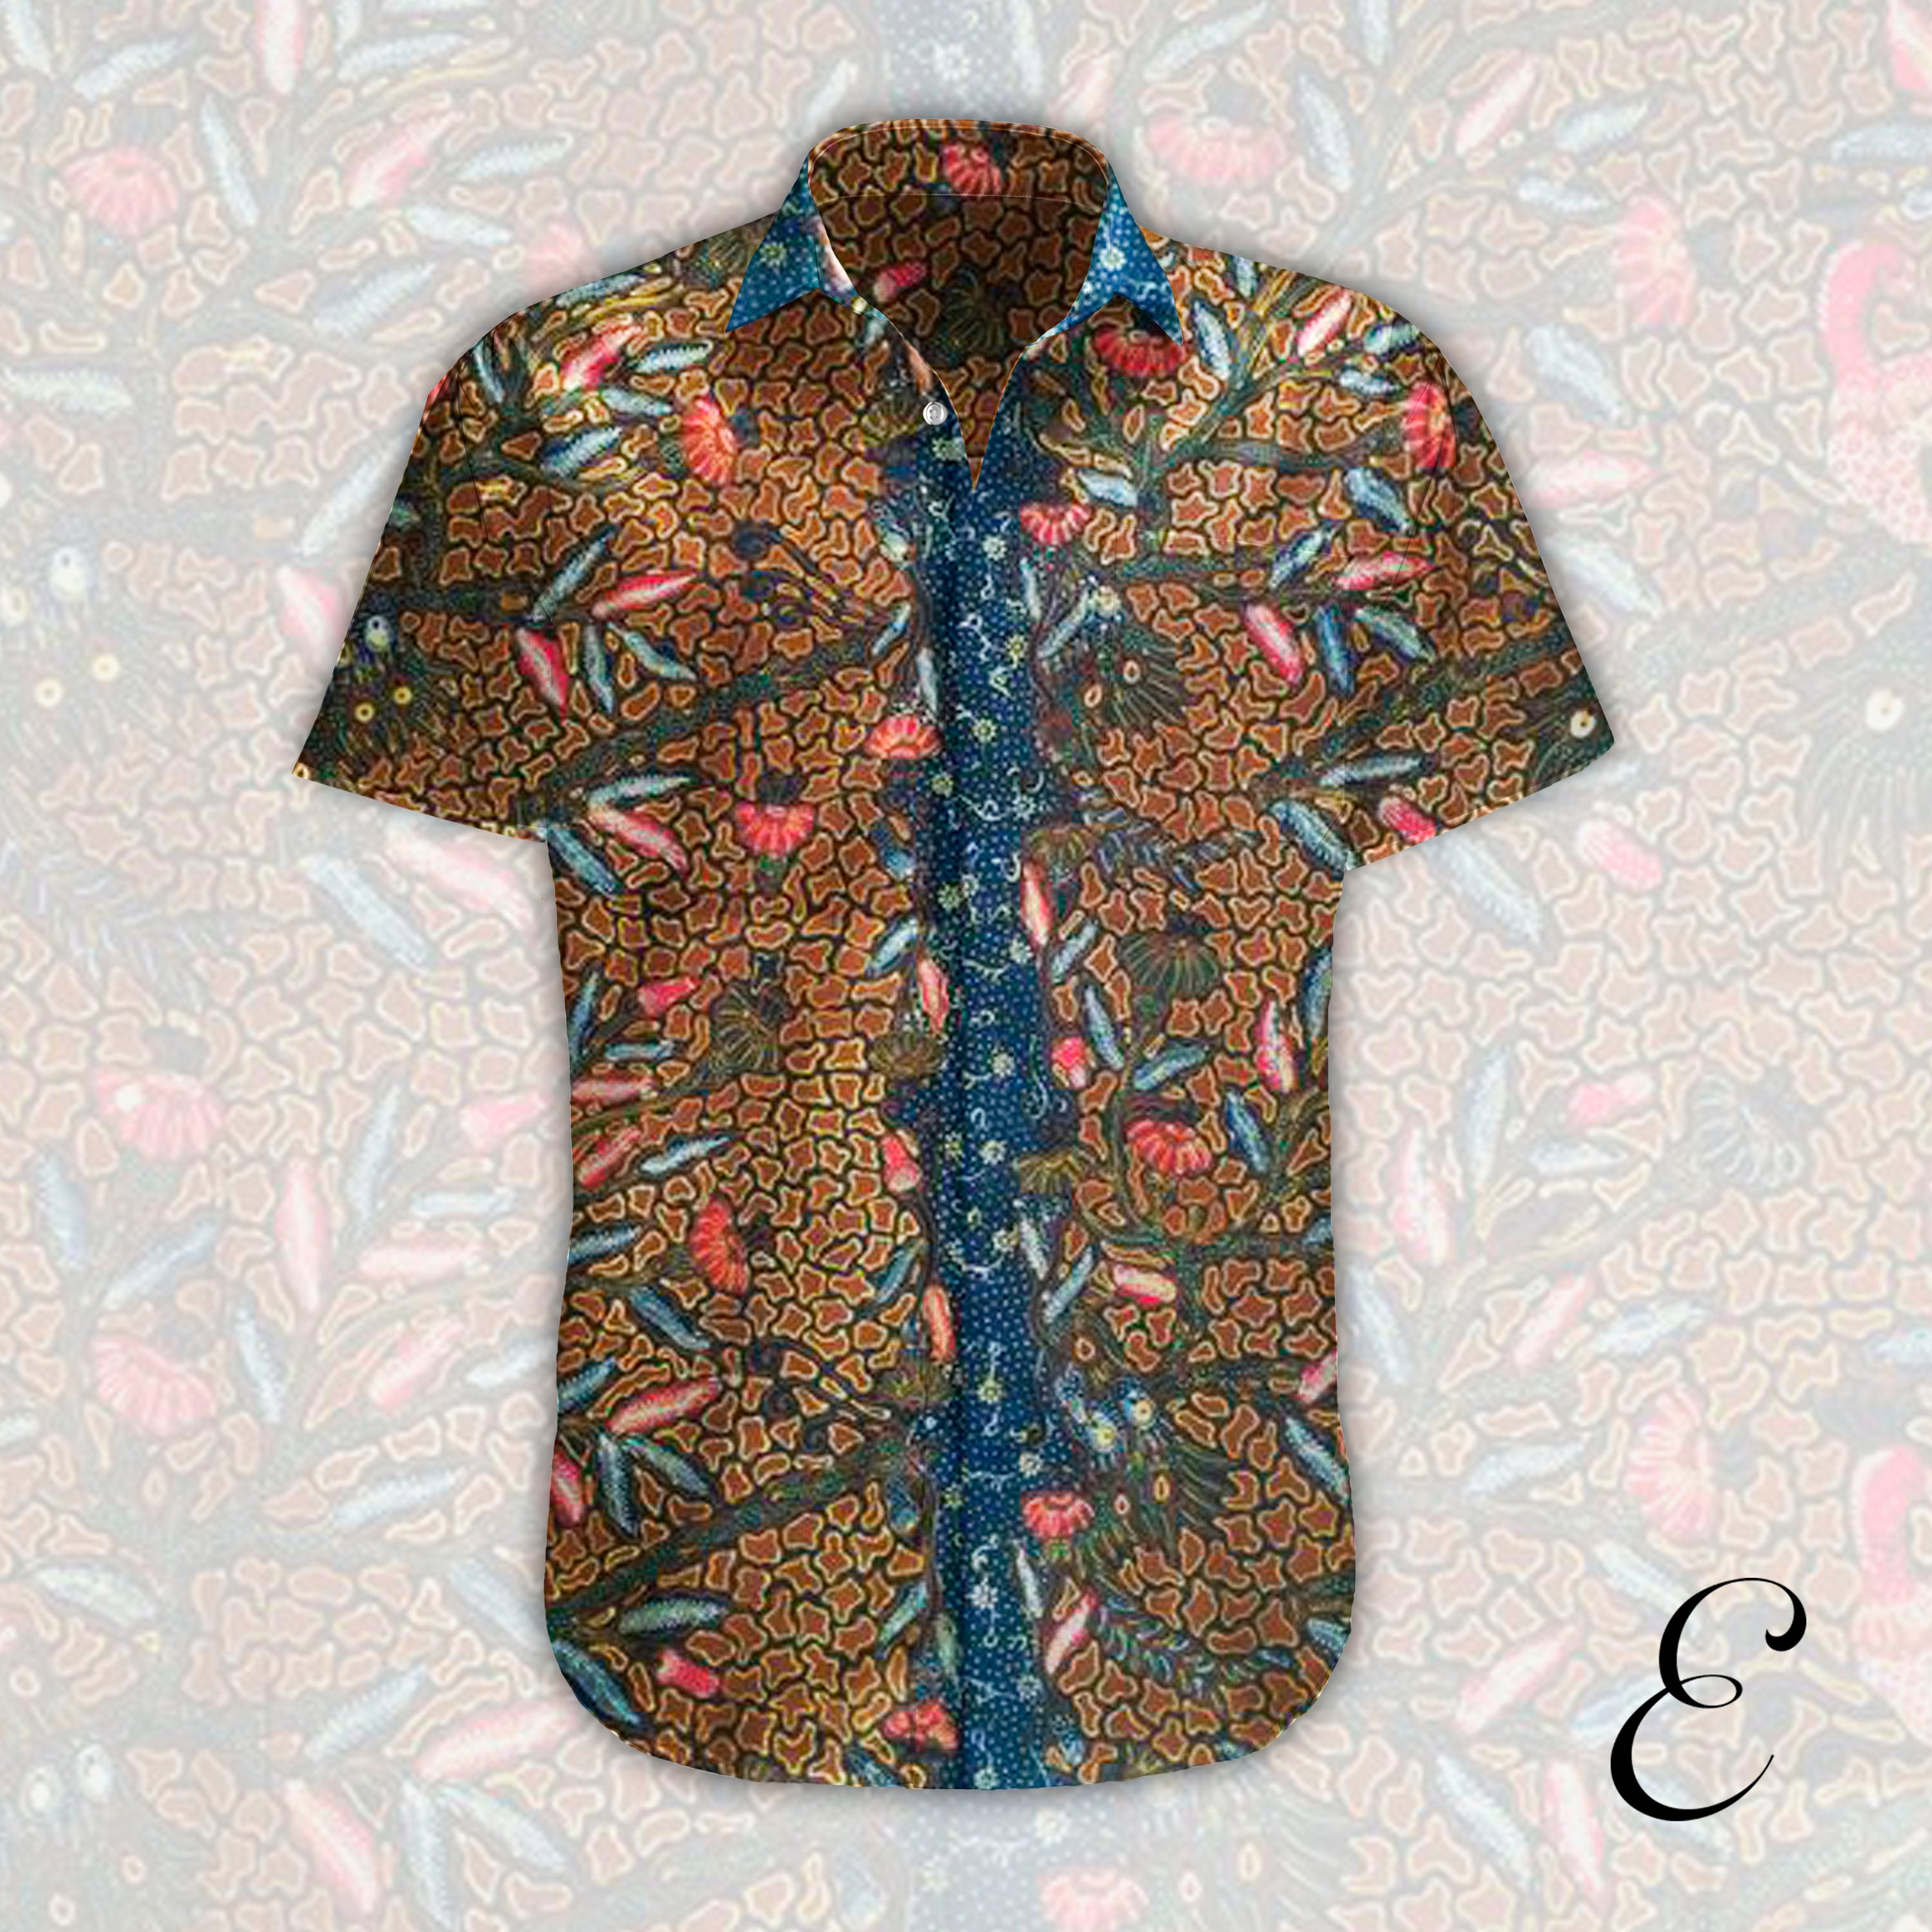 Batik Tulis Tulungagung KF-Z0009-19